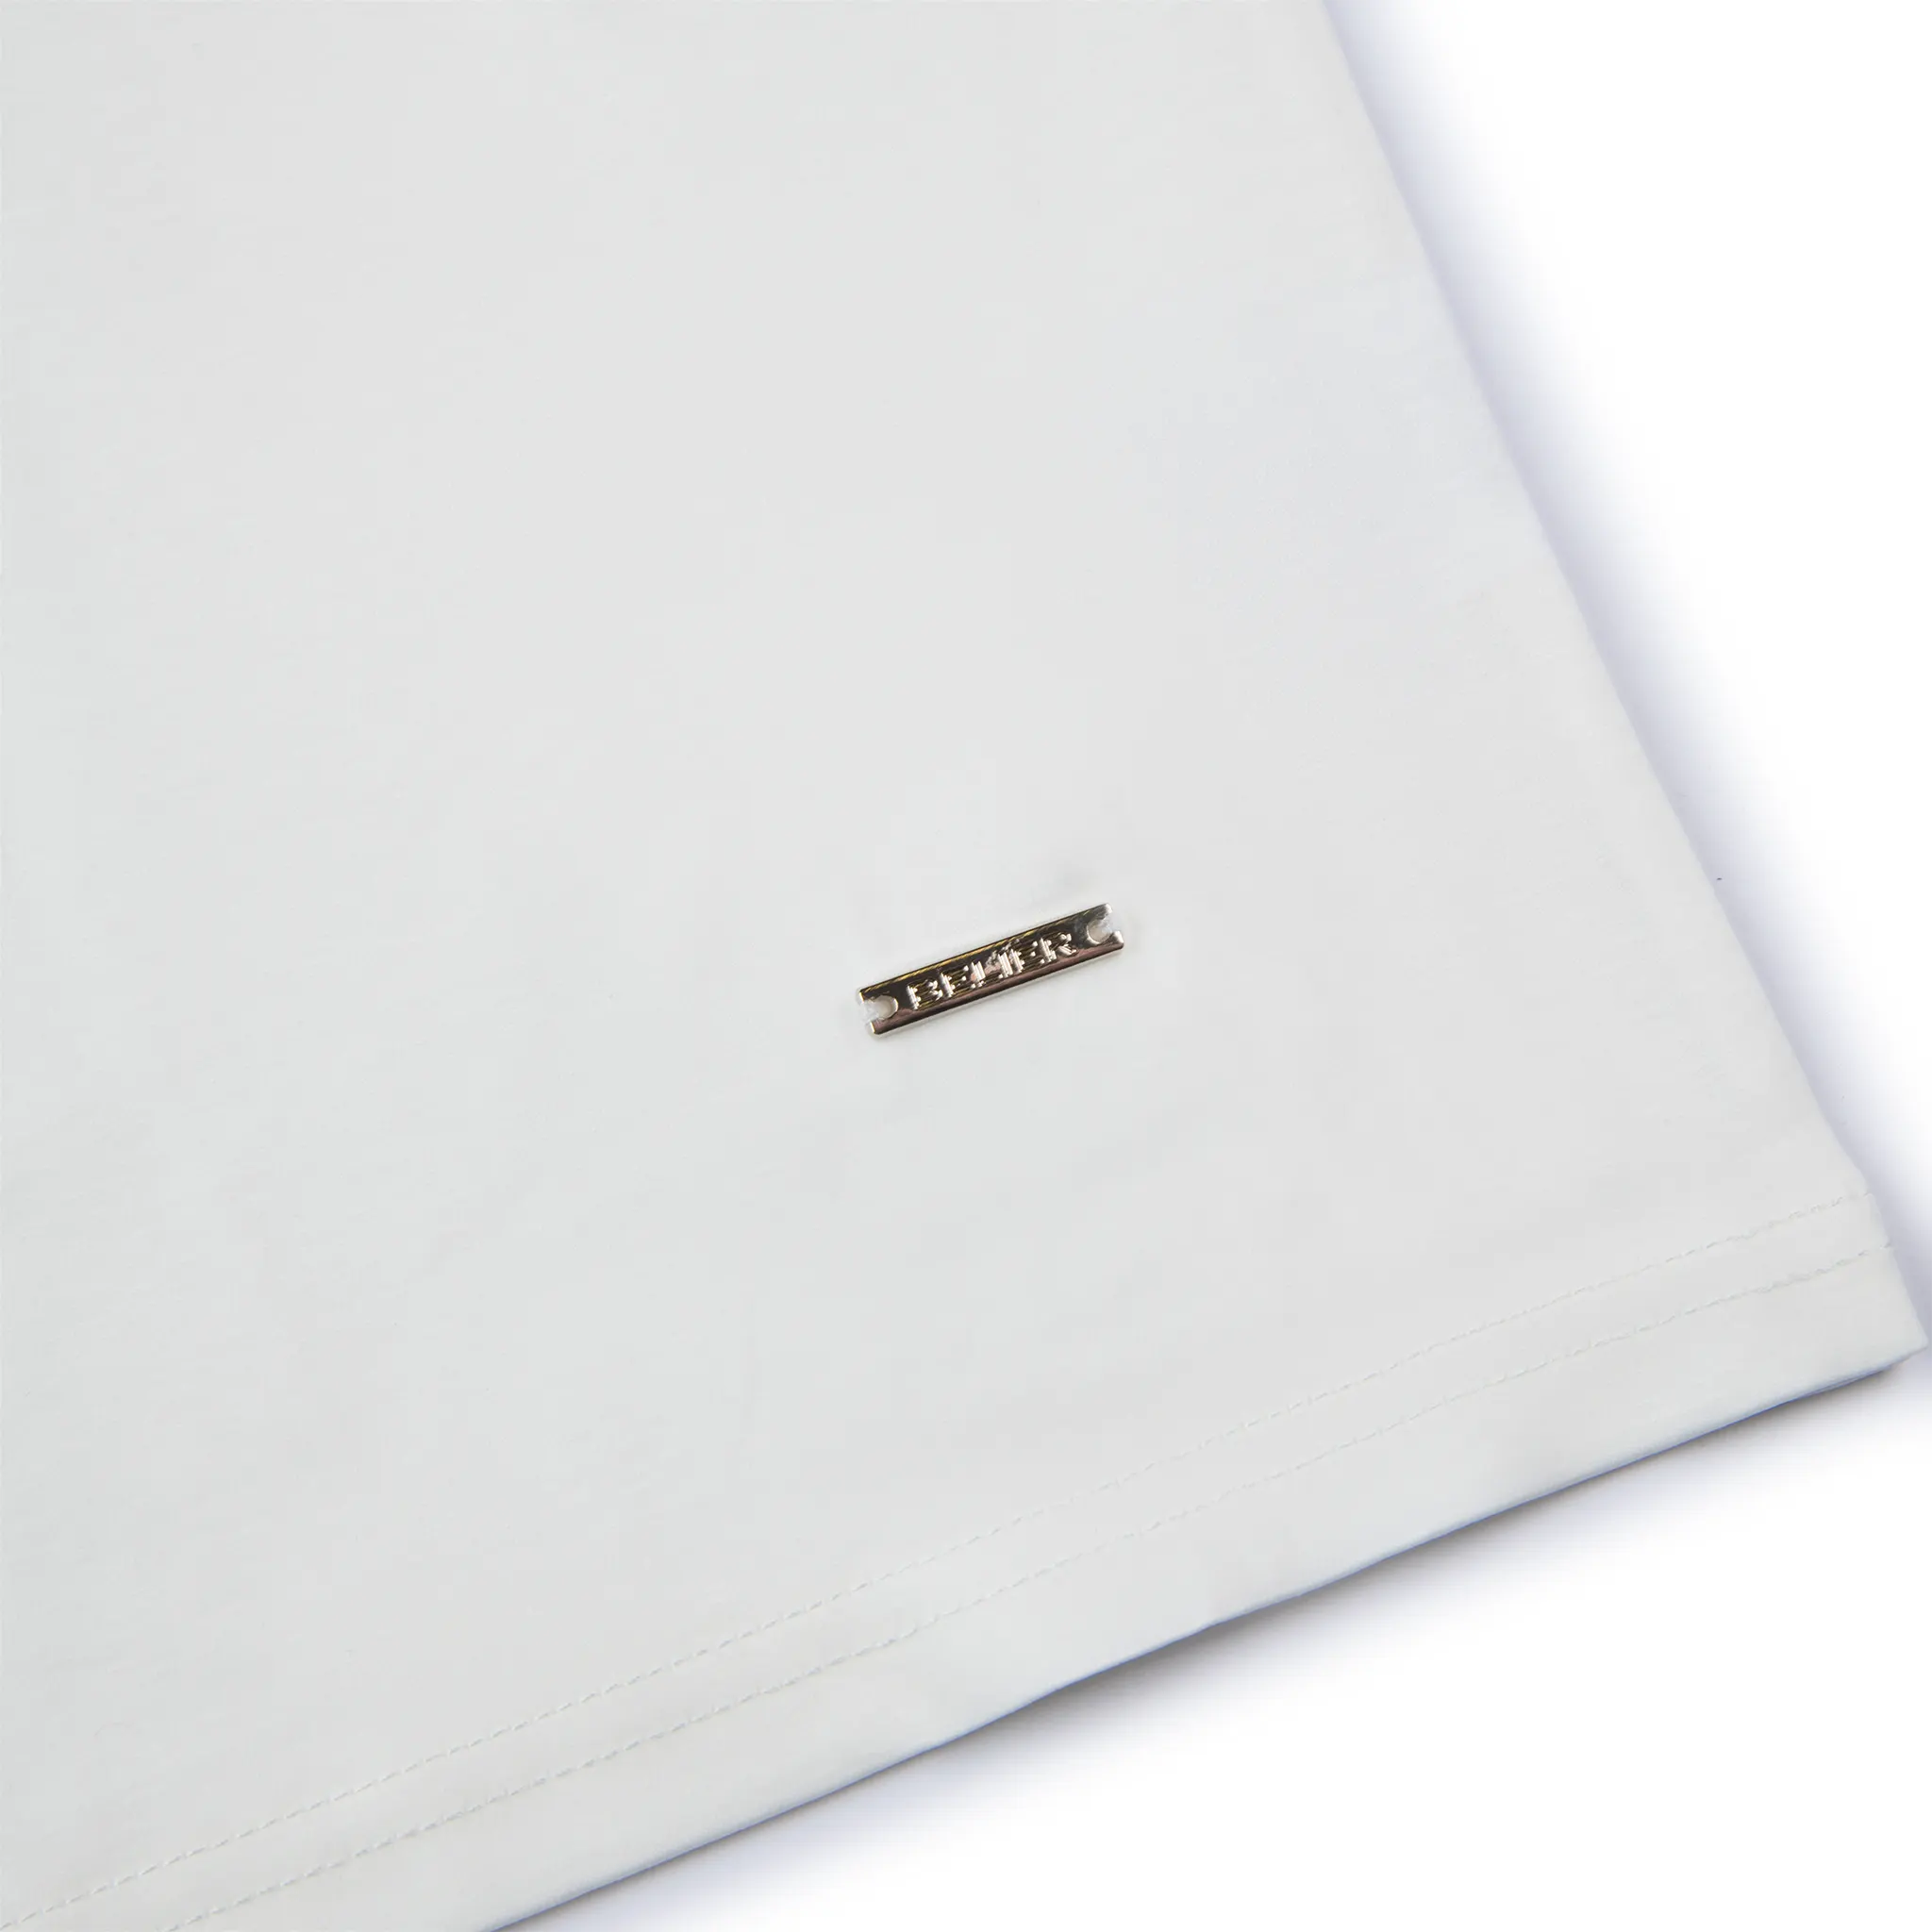 Detail view of Belier Zag Print White Yellow Pocket T Shirt BM-212